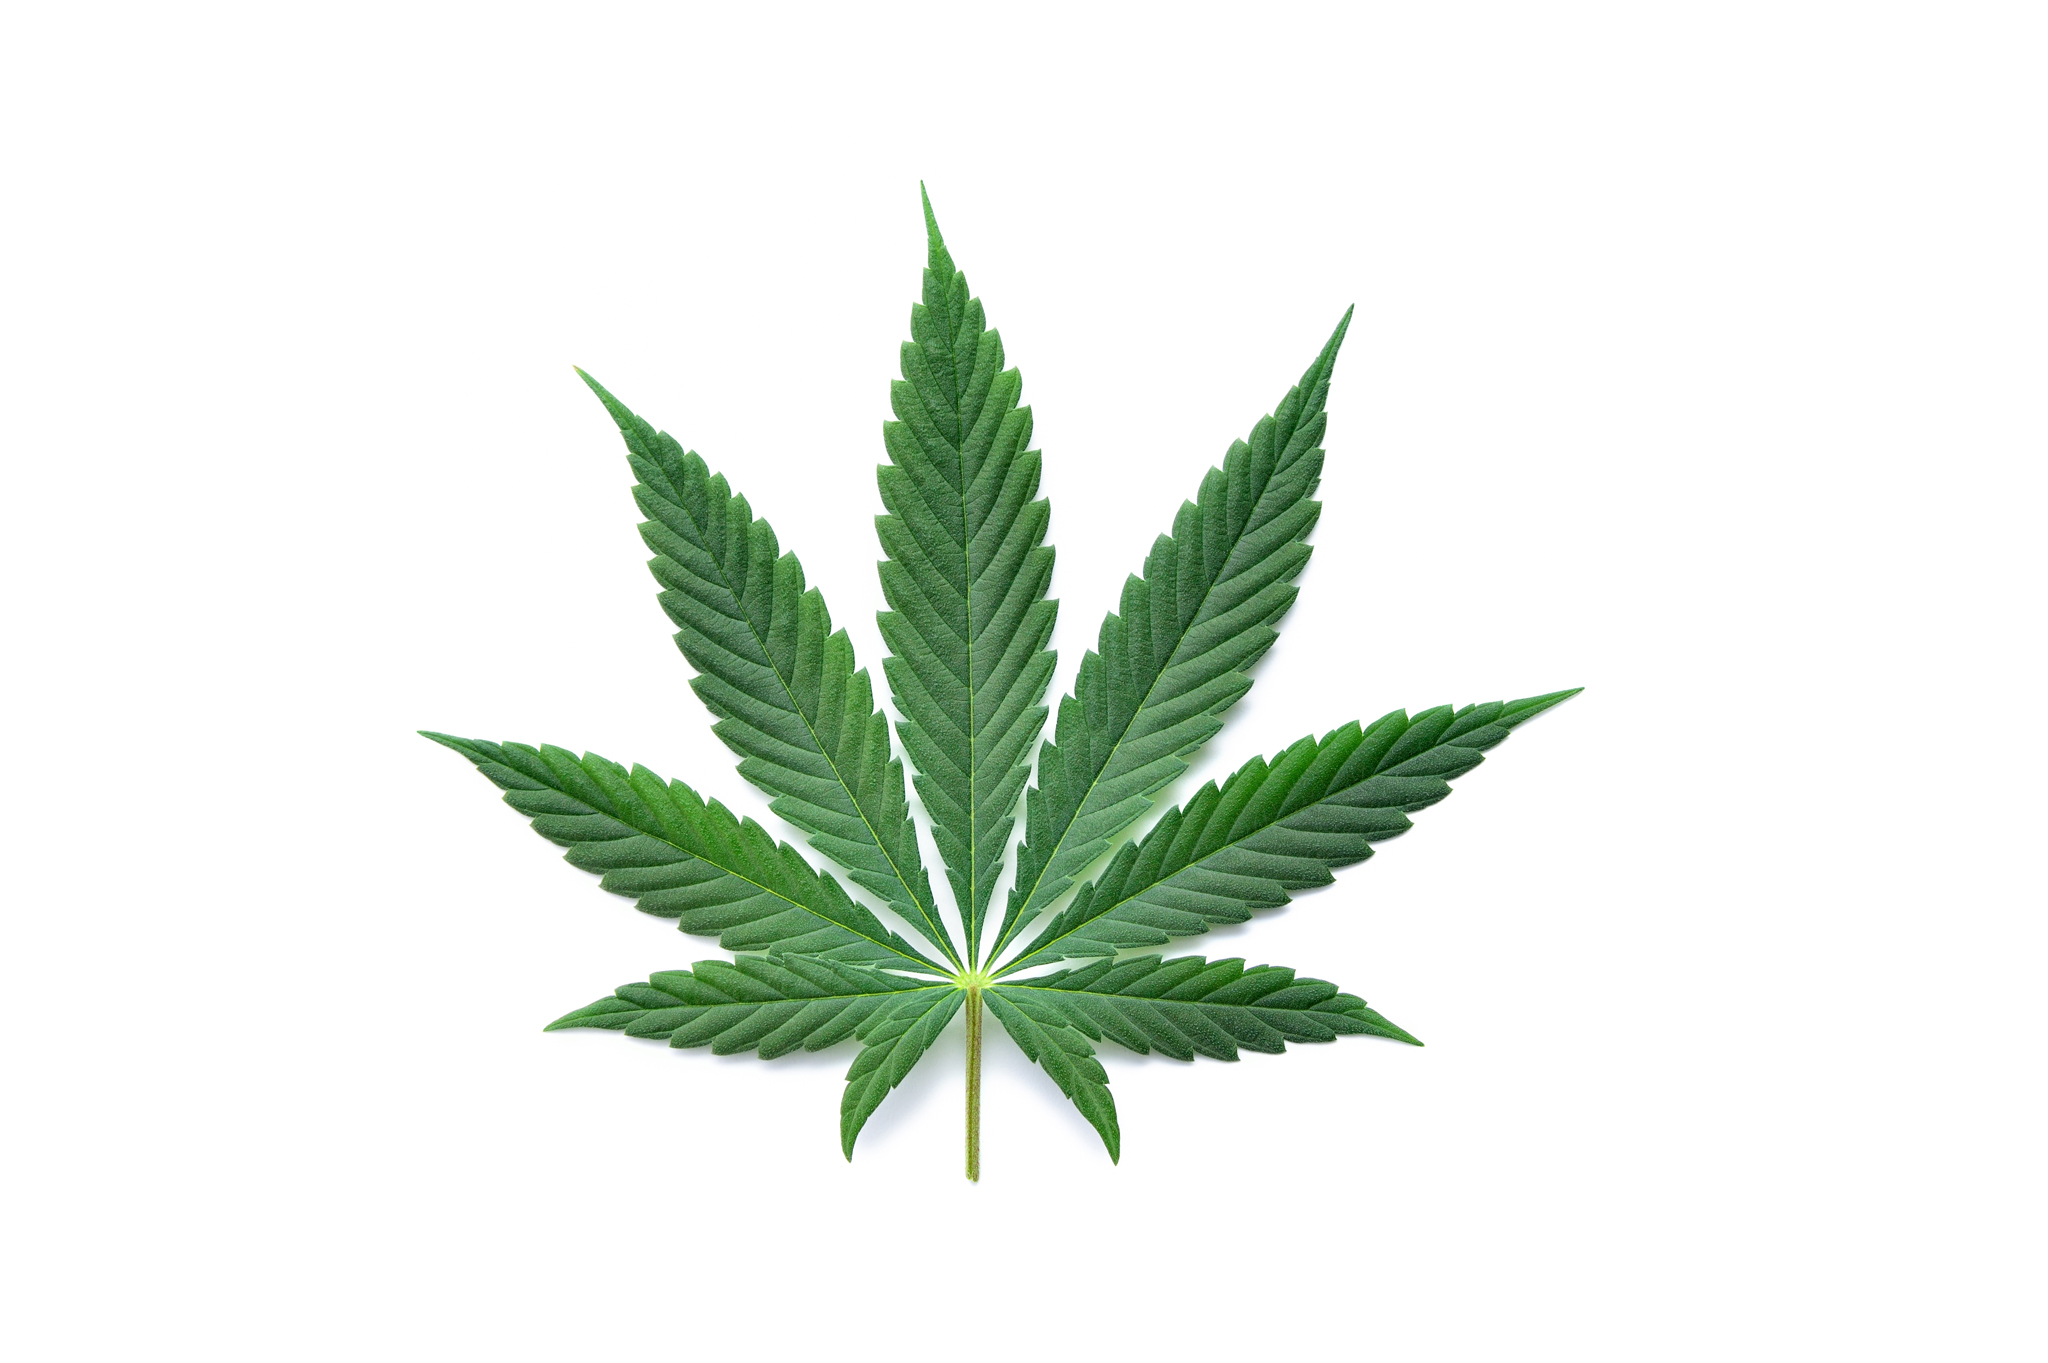 https://redfeatherlaboratories.com/wp-content/uploads/2020/11/cannabis-leaf-resized.jpg